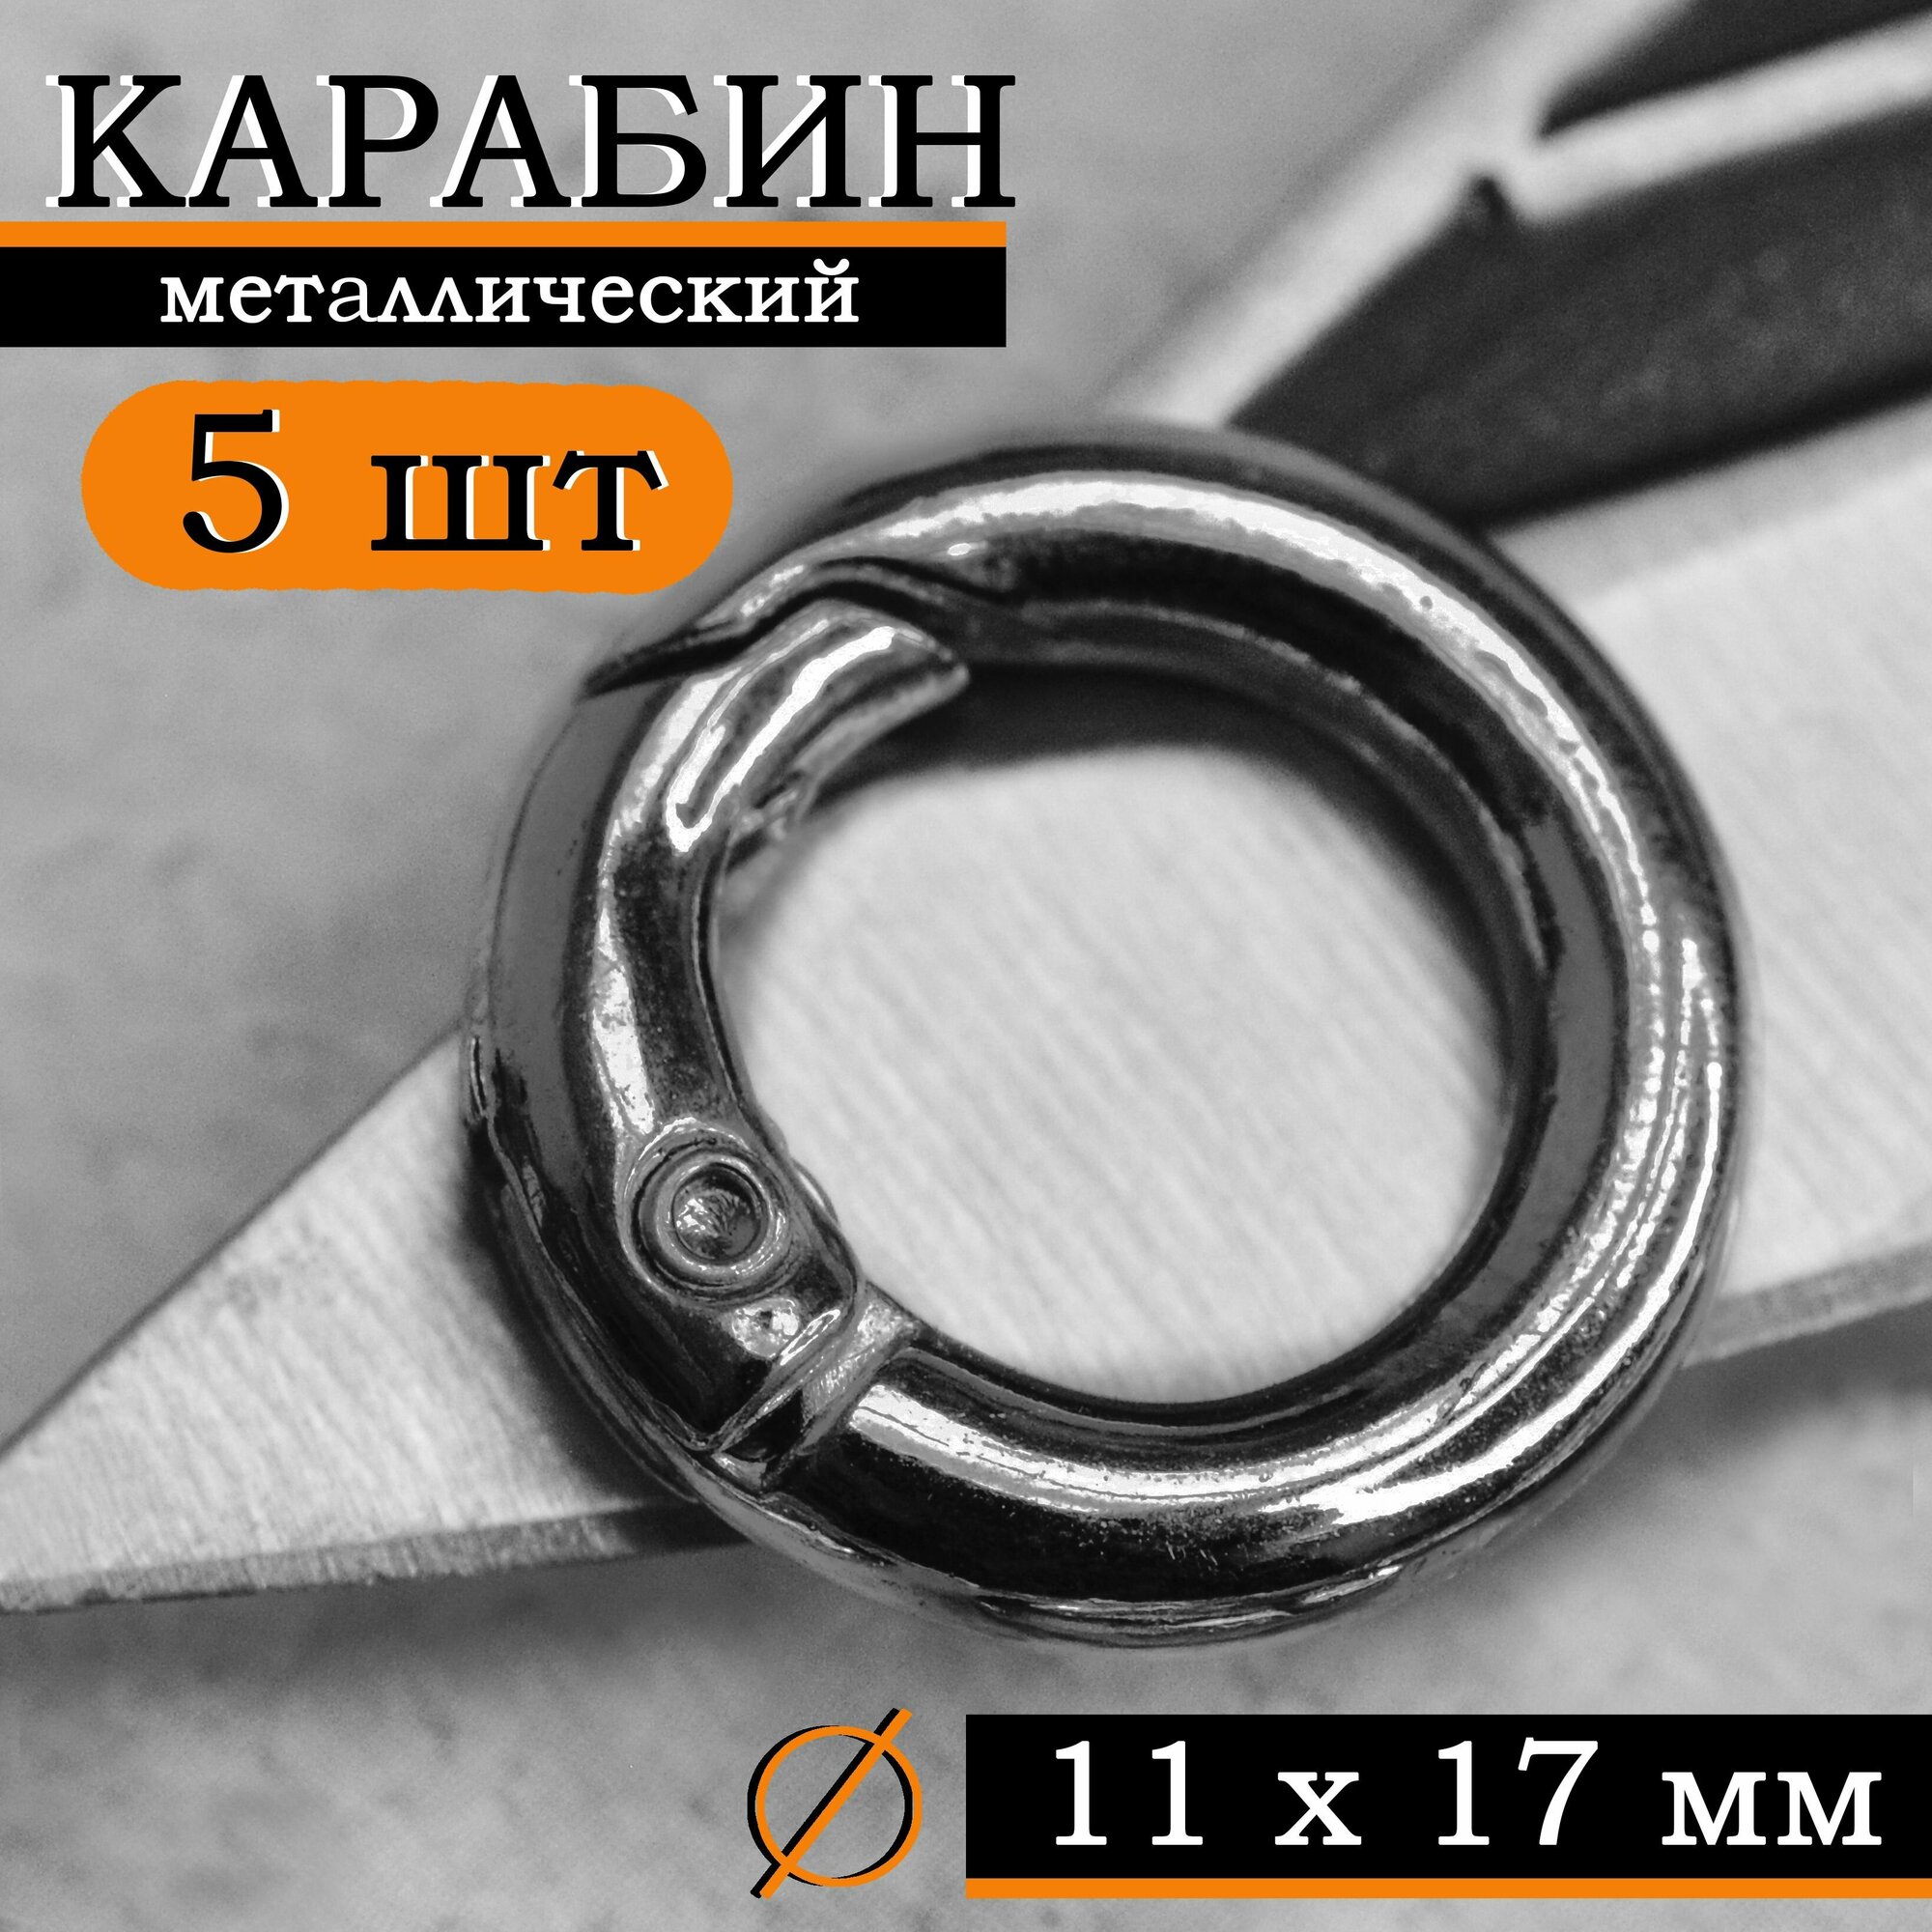 Кольцо карабин металлический плоский / Диаметр 11 мм, длина 17 мм, толщина 3 мм / 5 шт, цвет "Темно-серый"